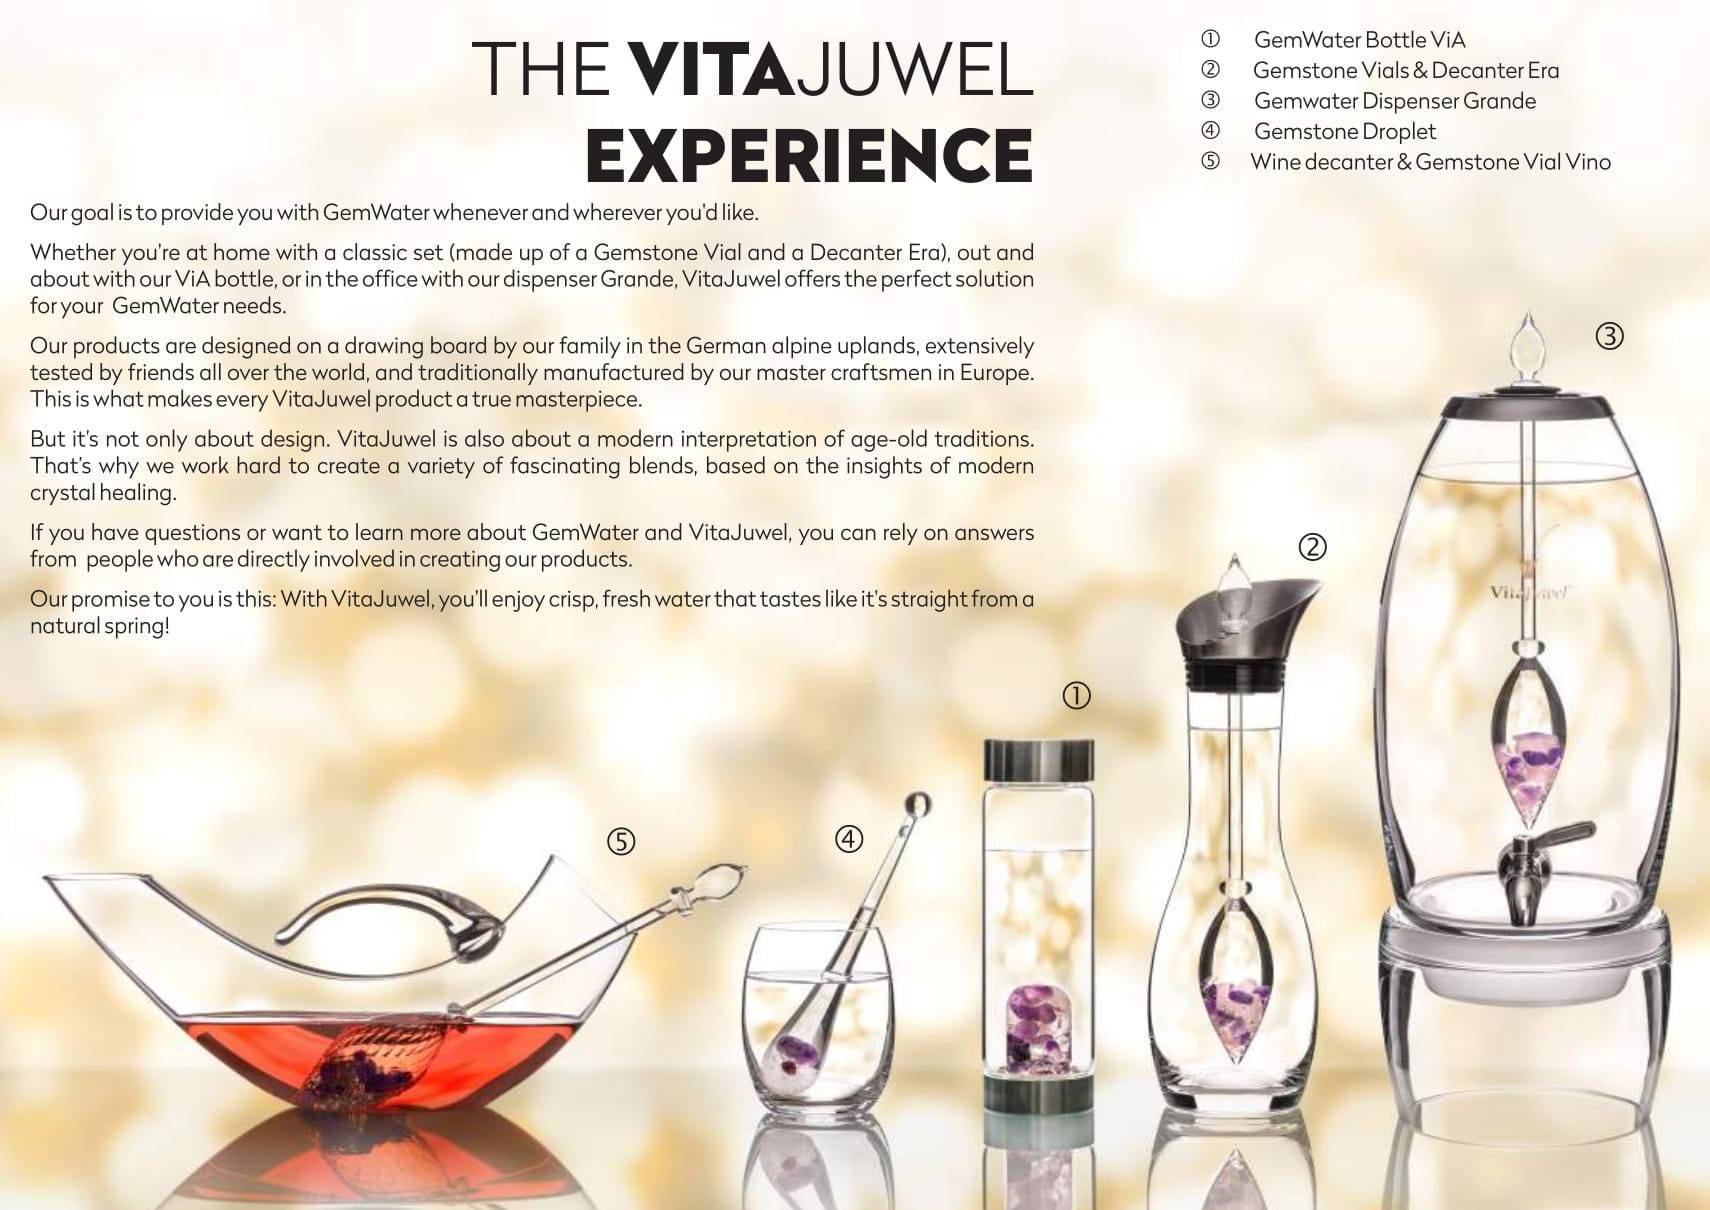 Vitajuwel ViA Gemwater Bottle BALANCE Blend with LOOP Handle Meditation Intuition Wisdom - claritycove.com